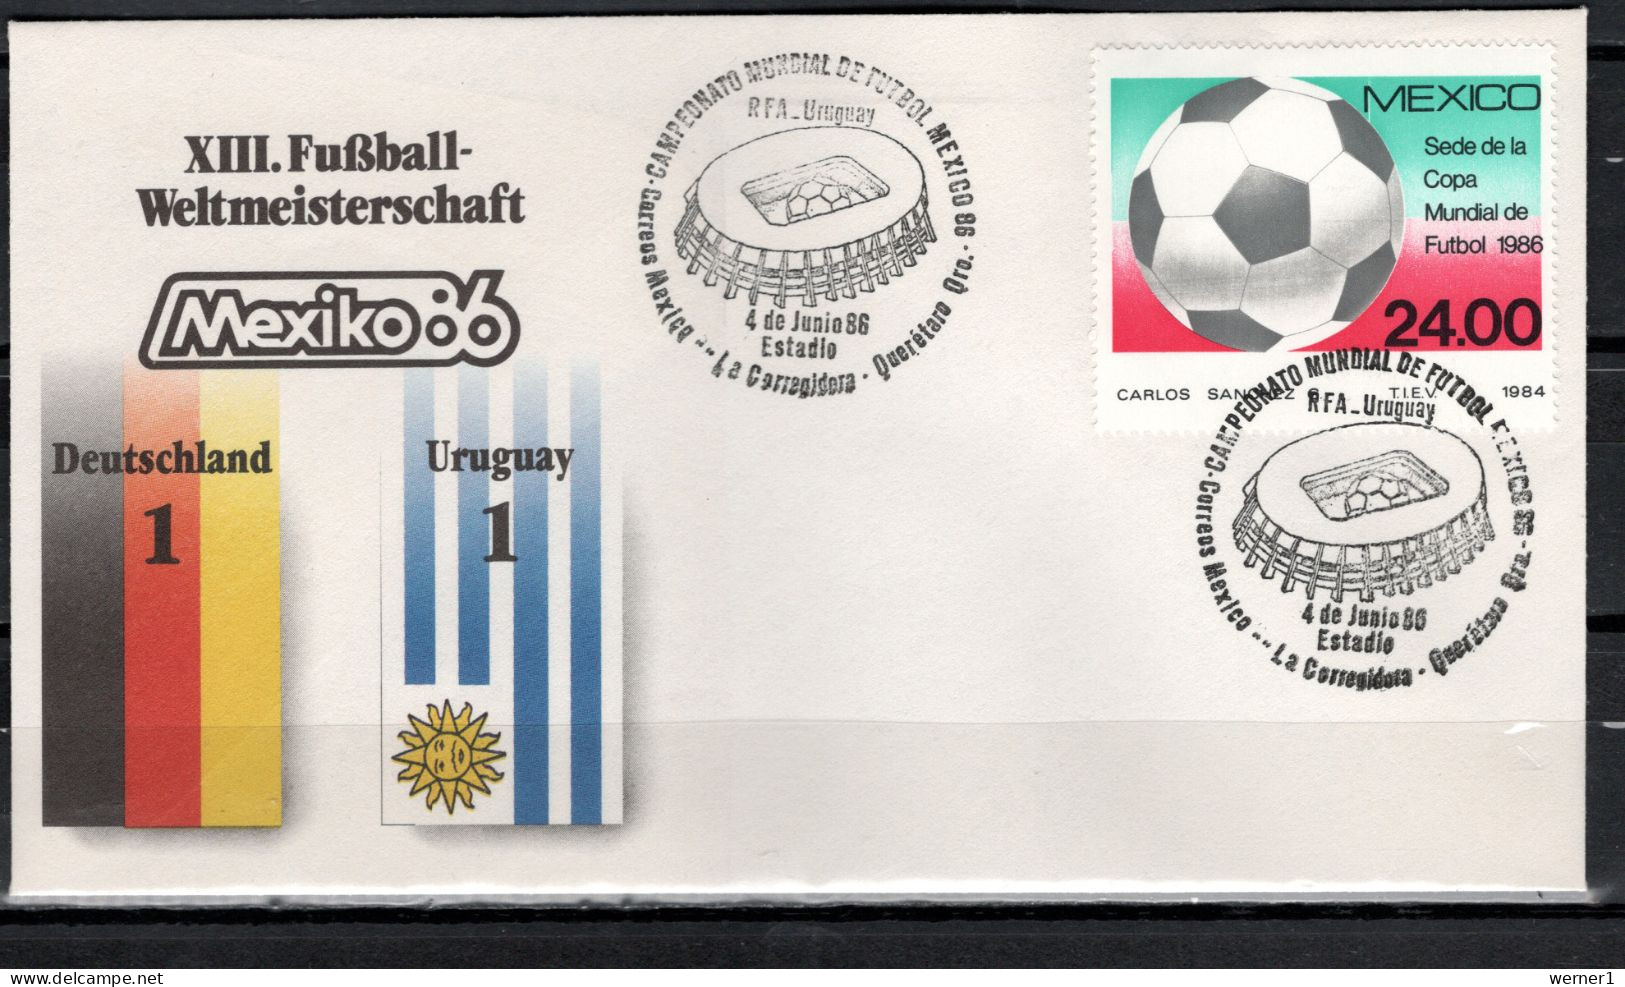 Mexico 1986 Football Soccer World Cup Commemorative Cover Match Germany - Uruguay 1 : 1 - 1986 – México